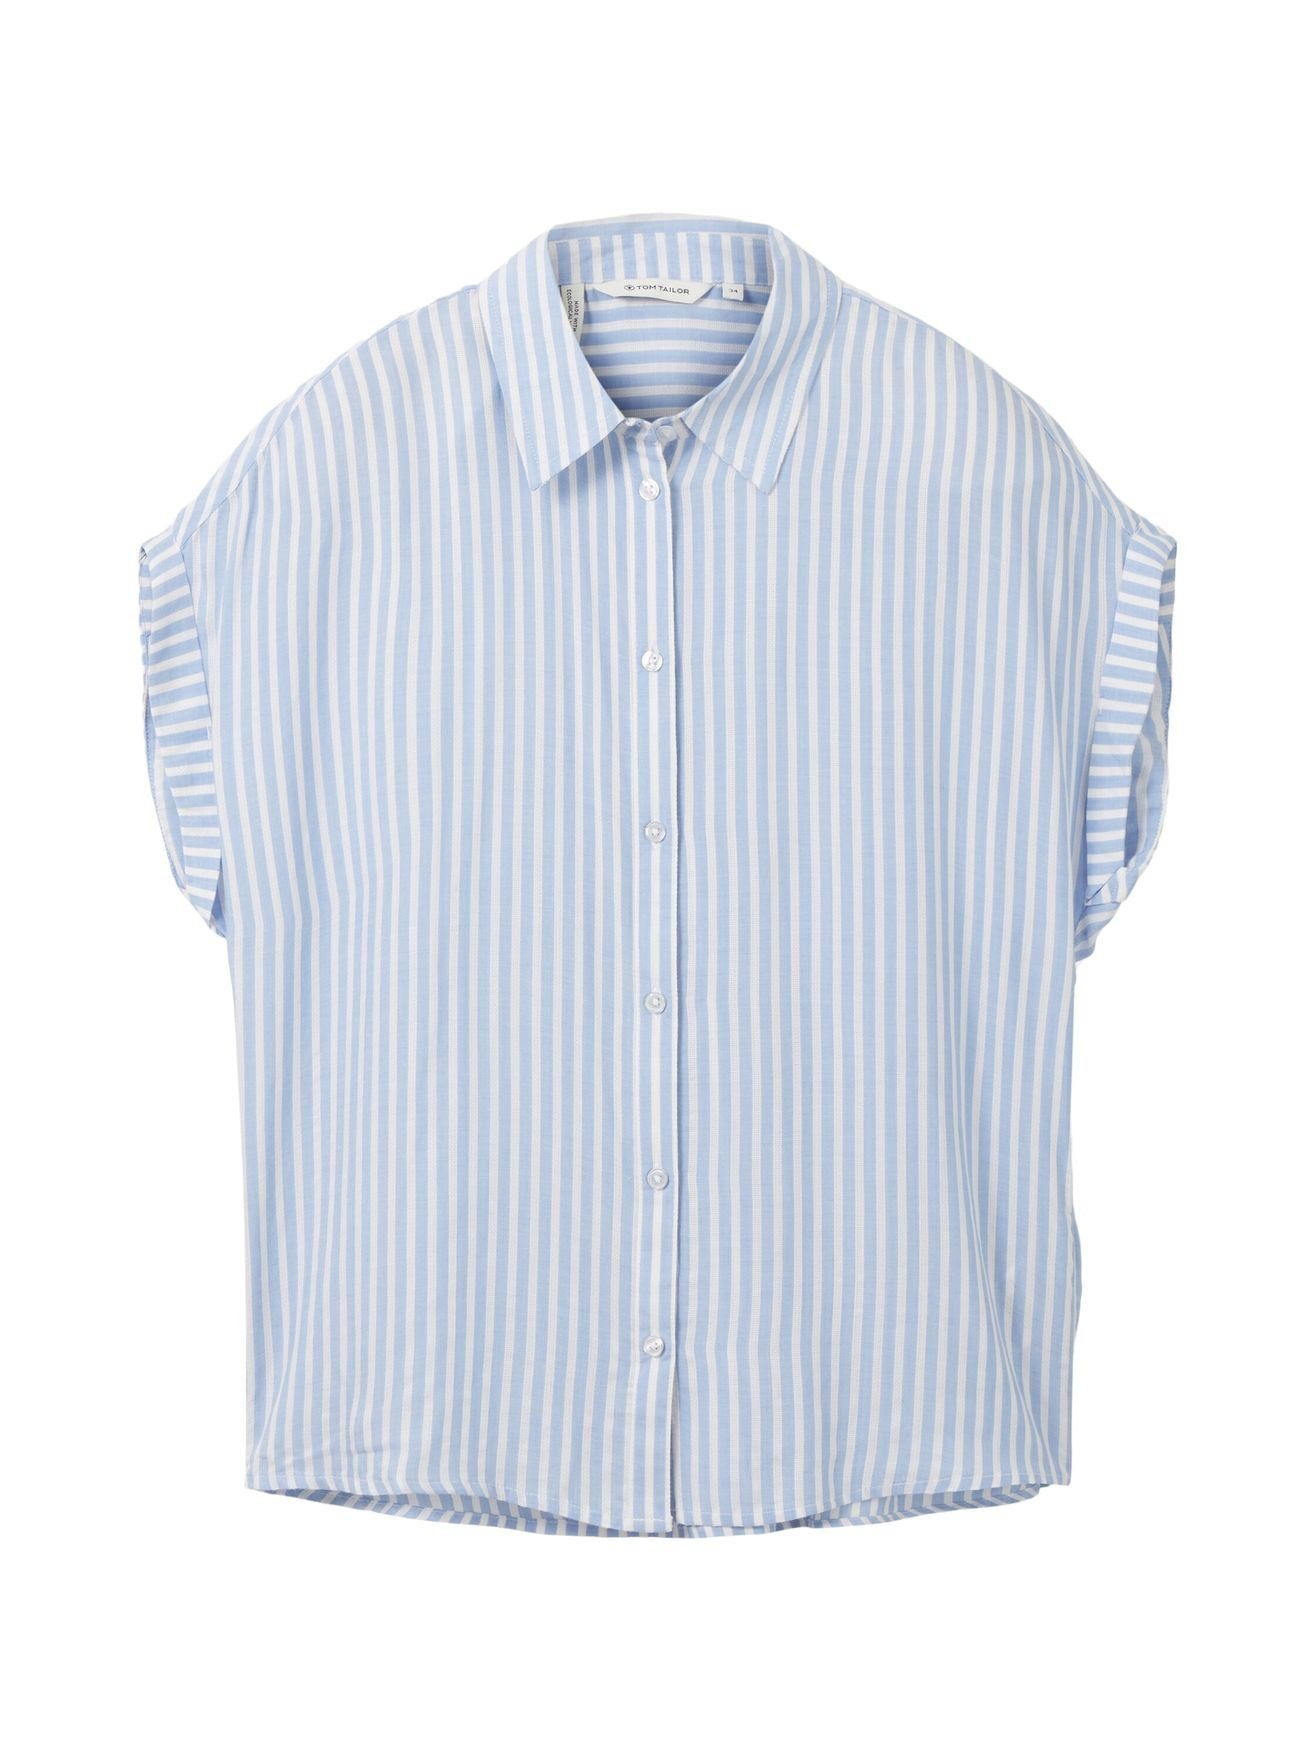 TOM TAILOR PLUS Blau Kurzarm Gestreifte Blusenshirt Bluse TAILOR Shirt 5364 in Übergröße TOM